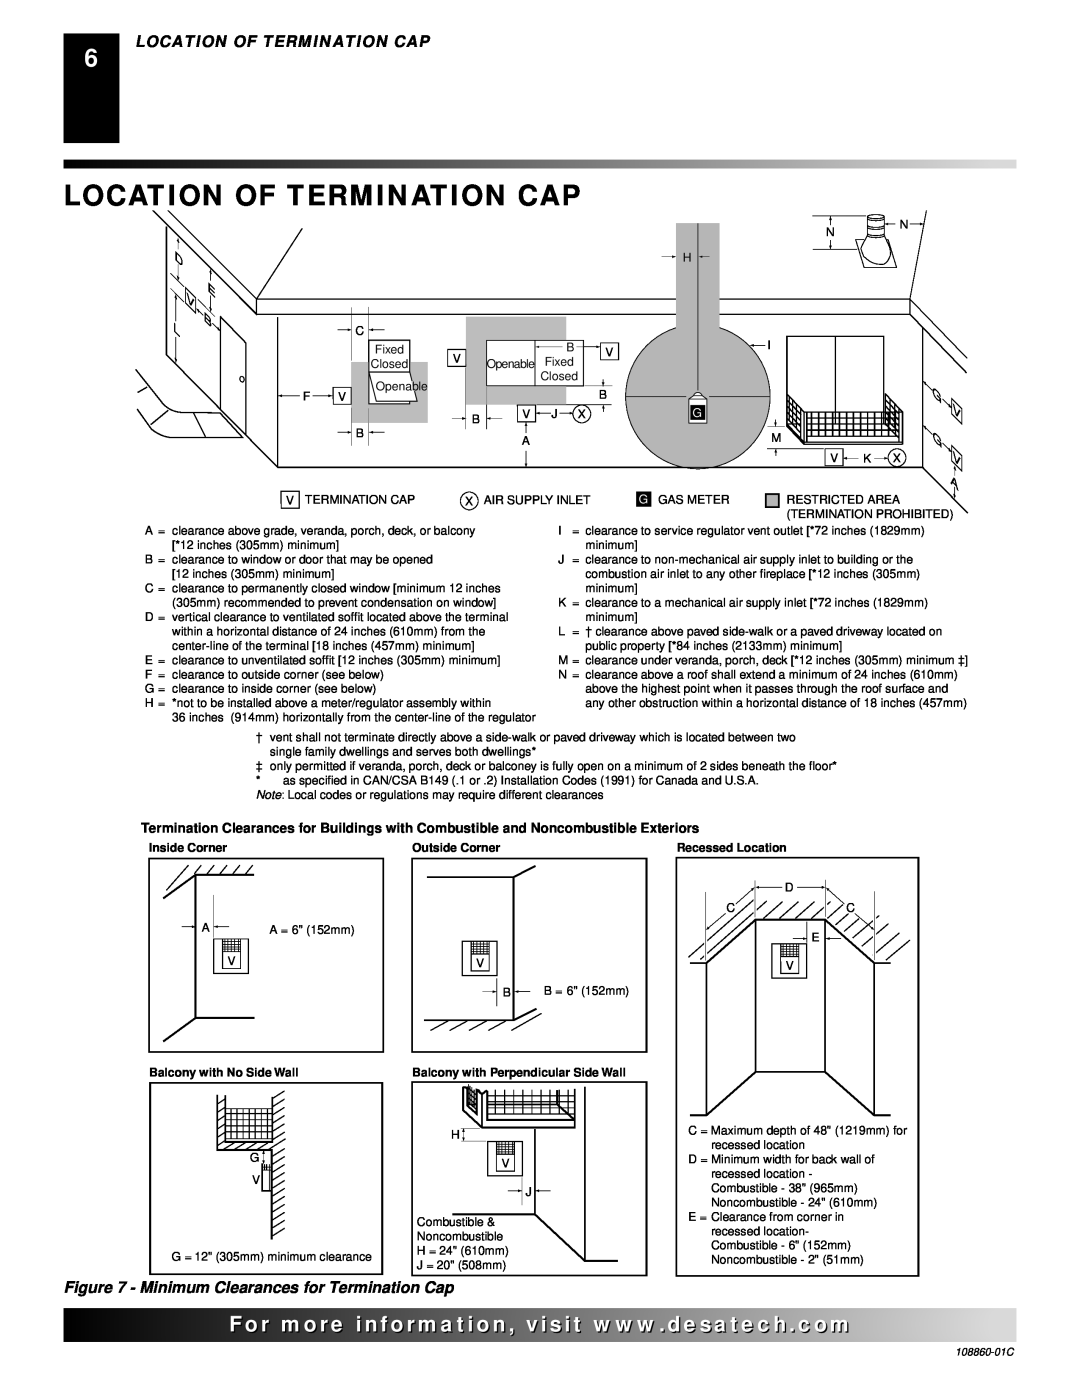 Desa (V)T36EP Location Of Termination Cap, D E B L, V G V A, Minimum Clearances for Termination Cap, Inside Corner 